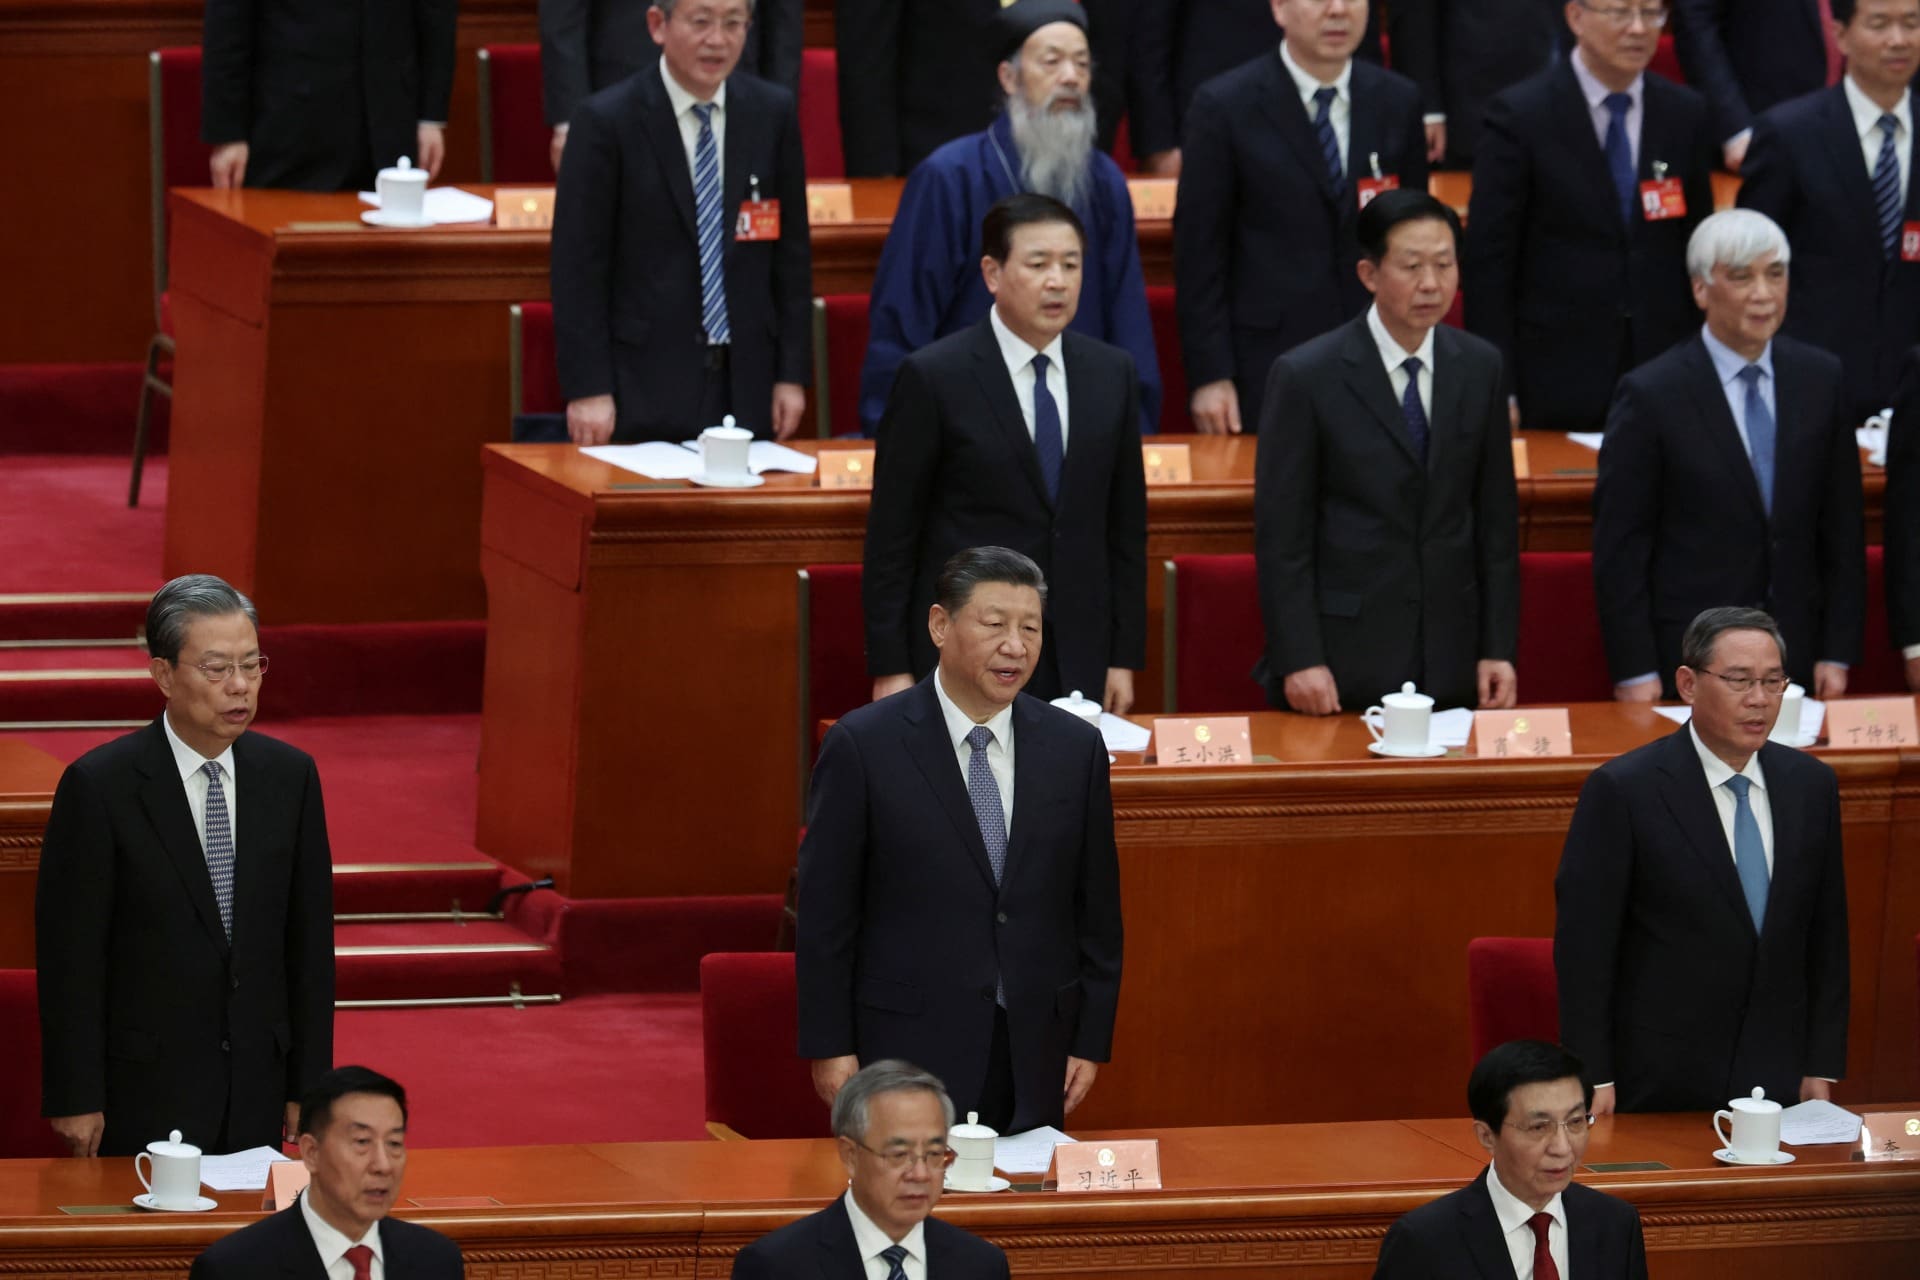 presidente chines adverte contra bolhas economicas na aposta na inovacao